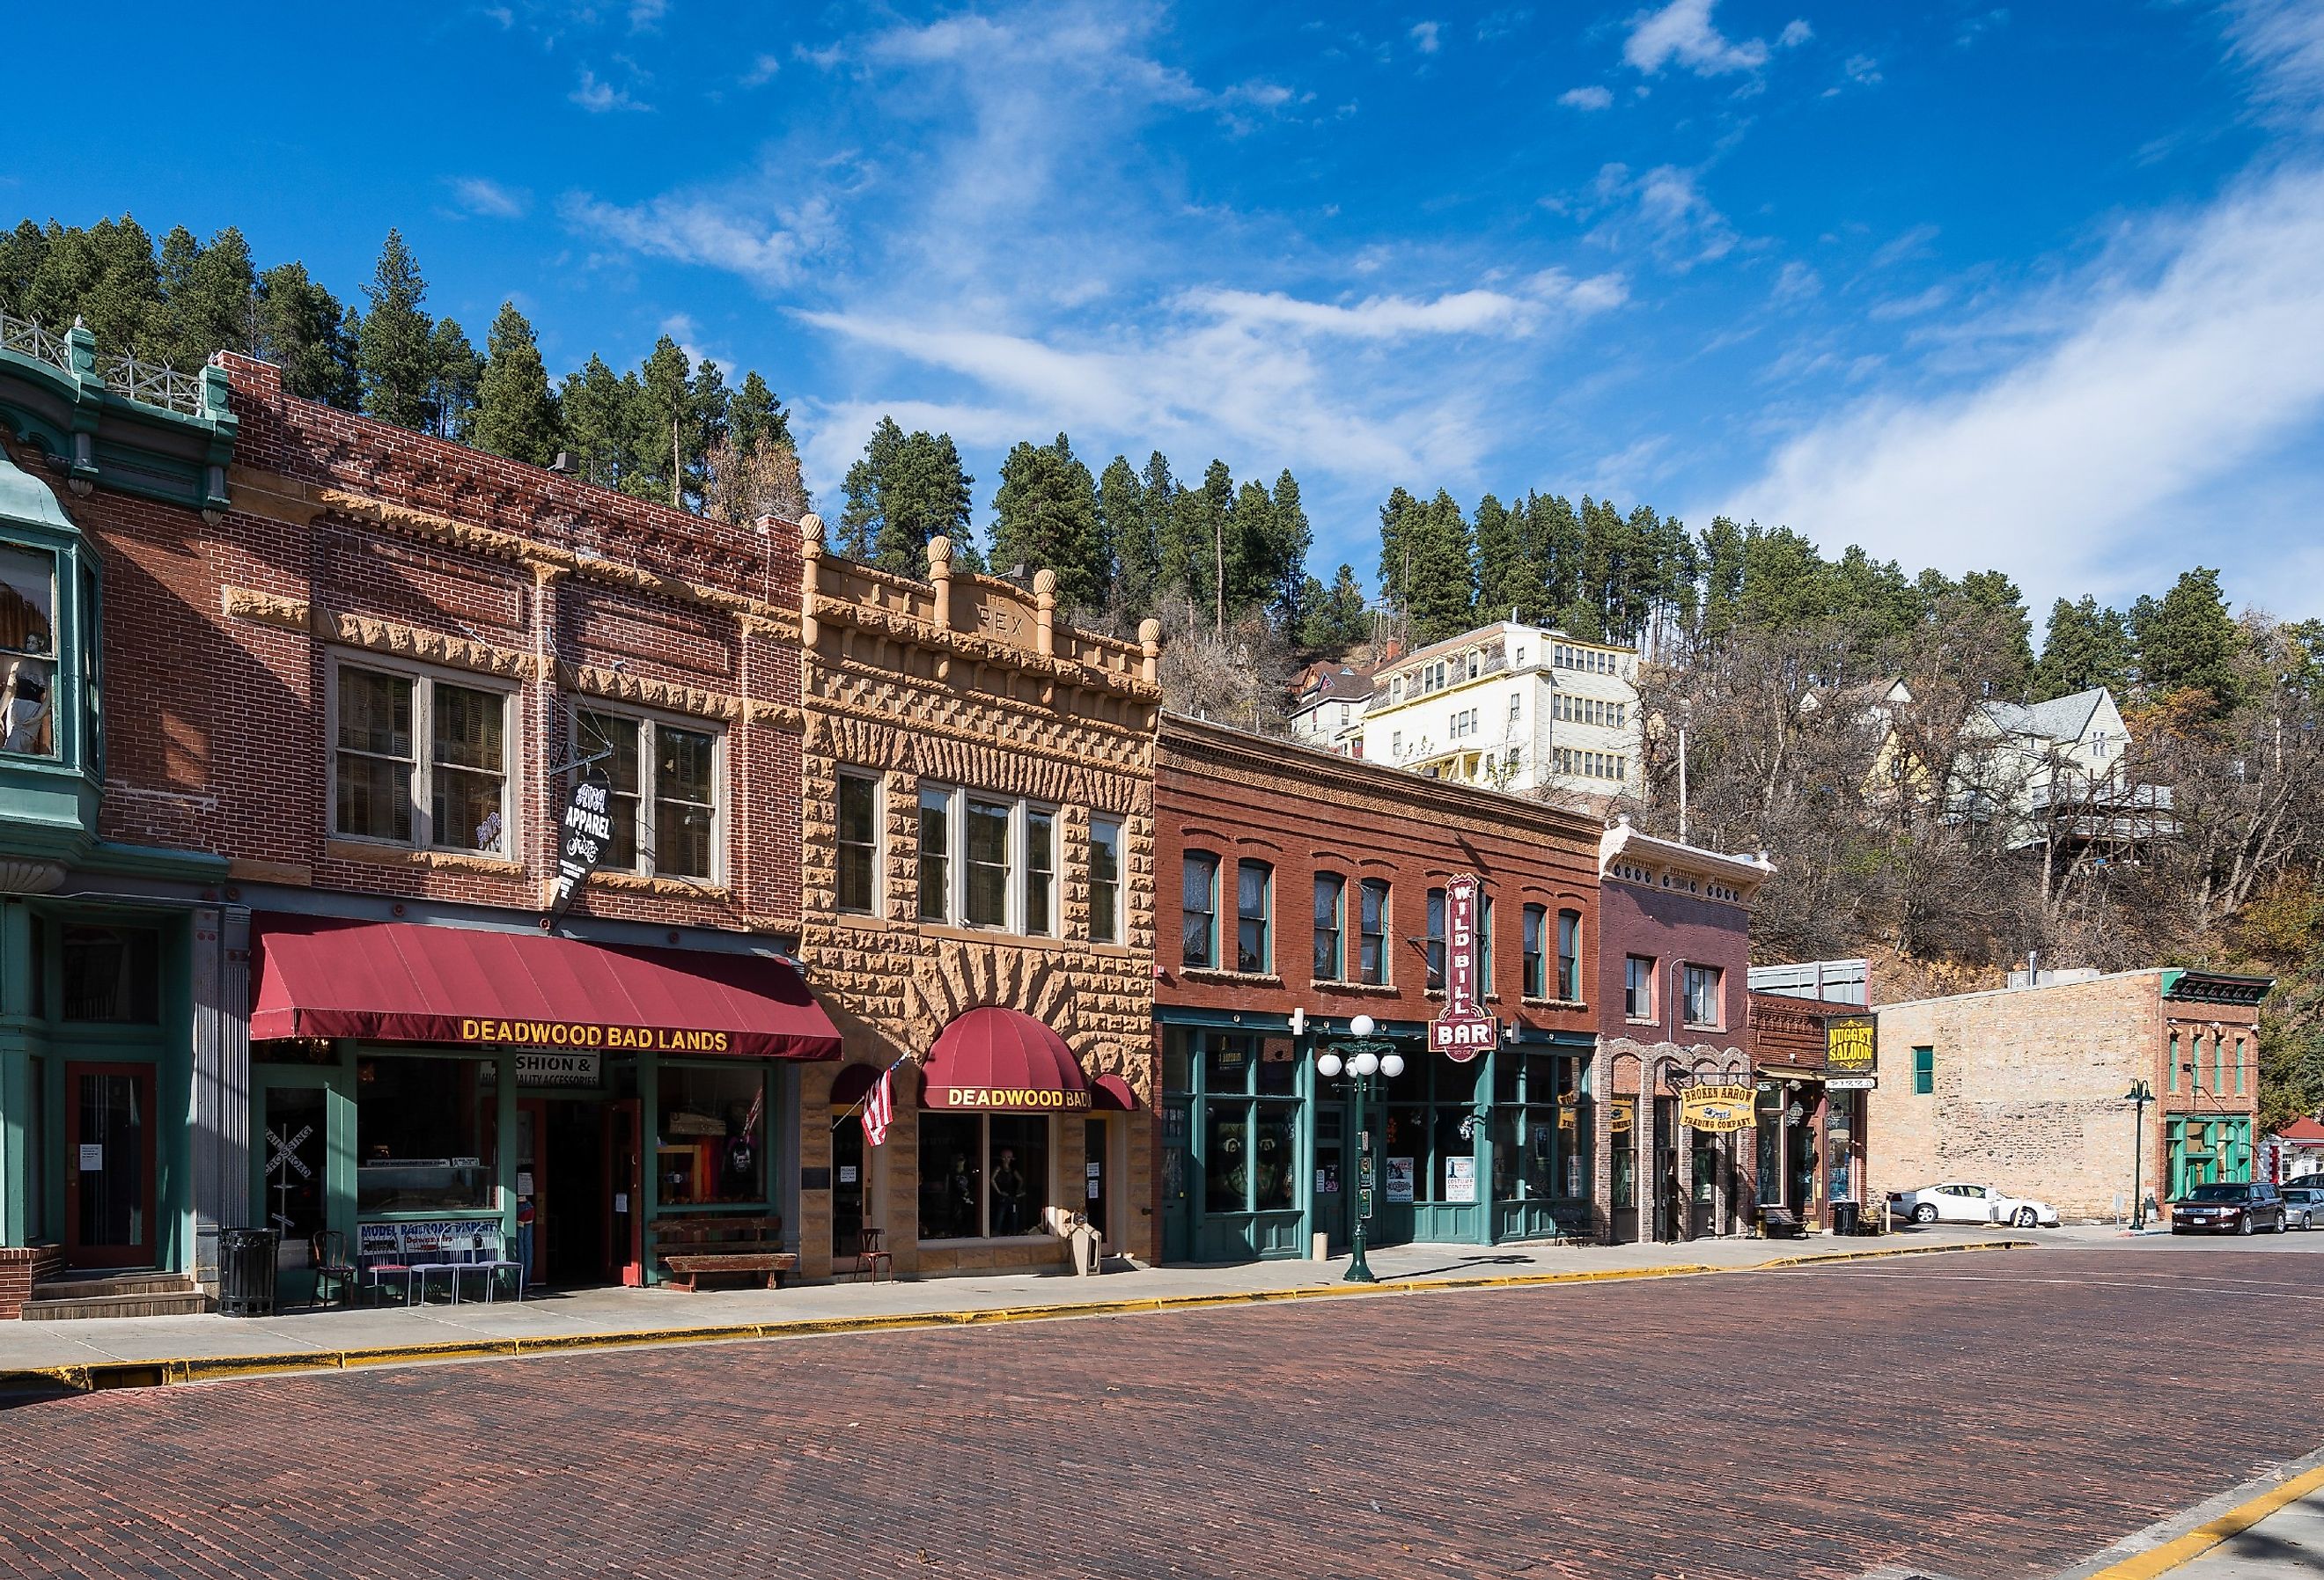 Historic downtown Main Street in Deadwood, South Dakota. Image credit Nagel Photography via Shutterstock